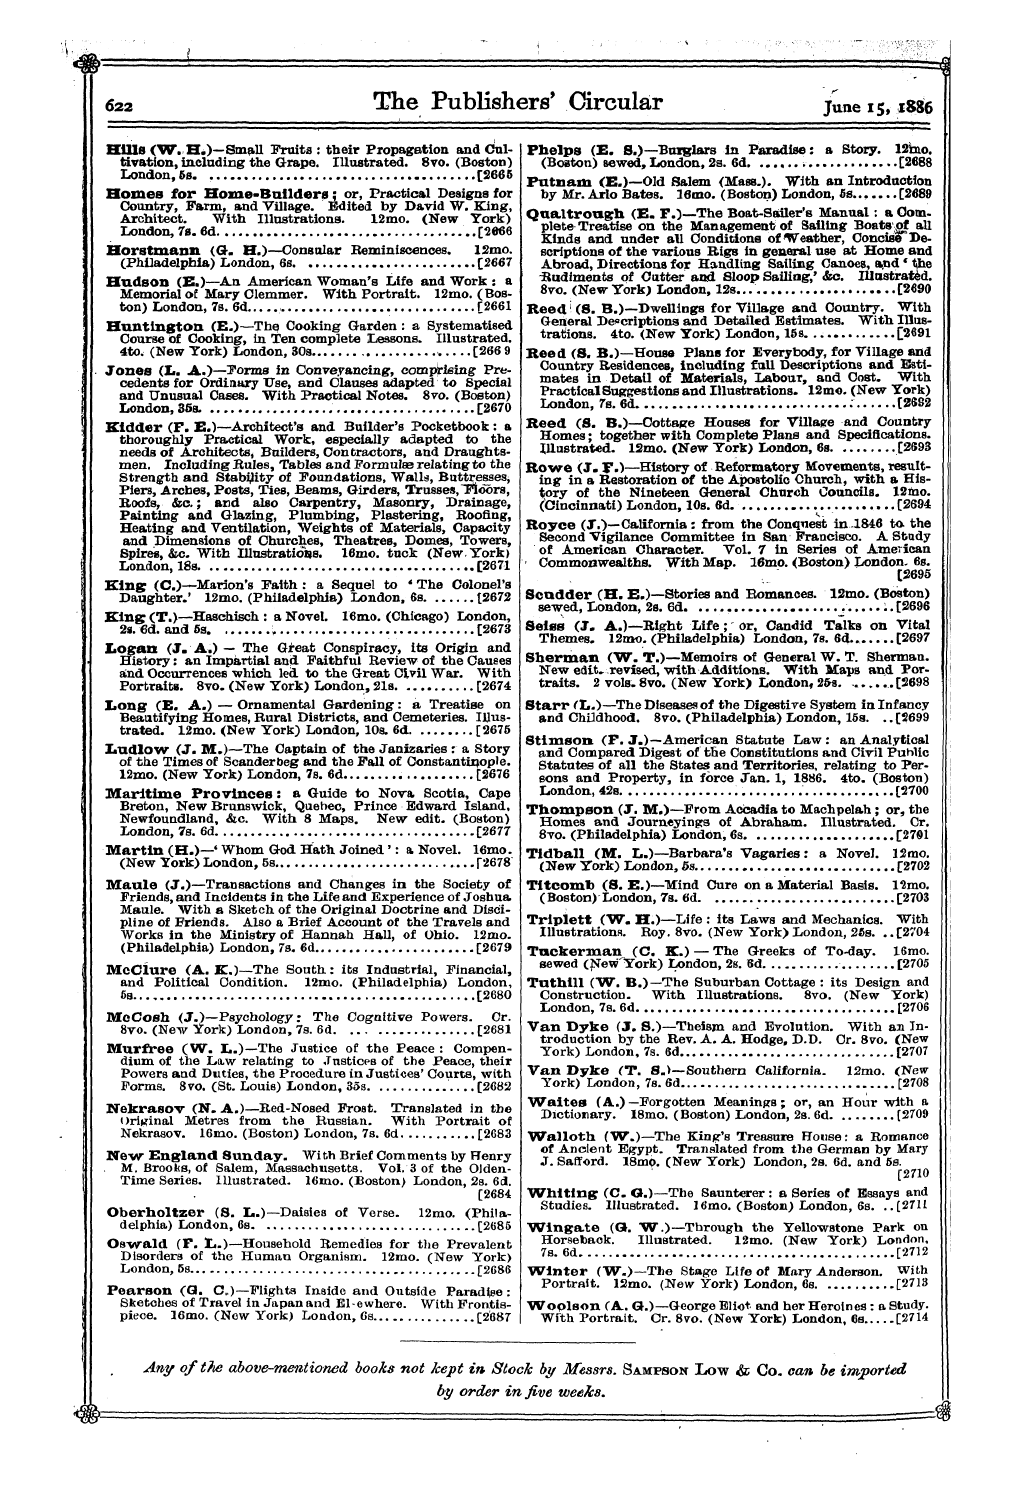 Publishers’ Circular (1880-1890): jS F Y, 1st edition: 28